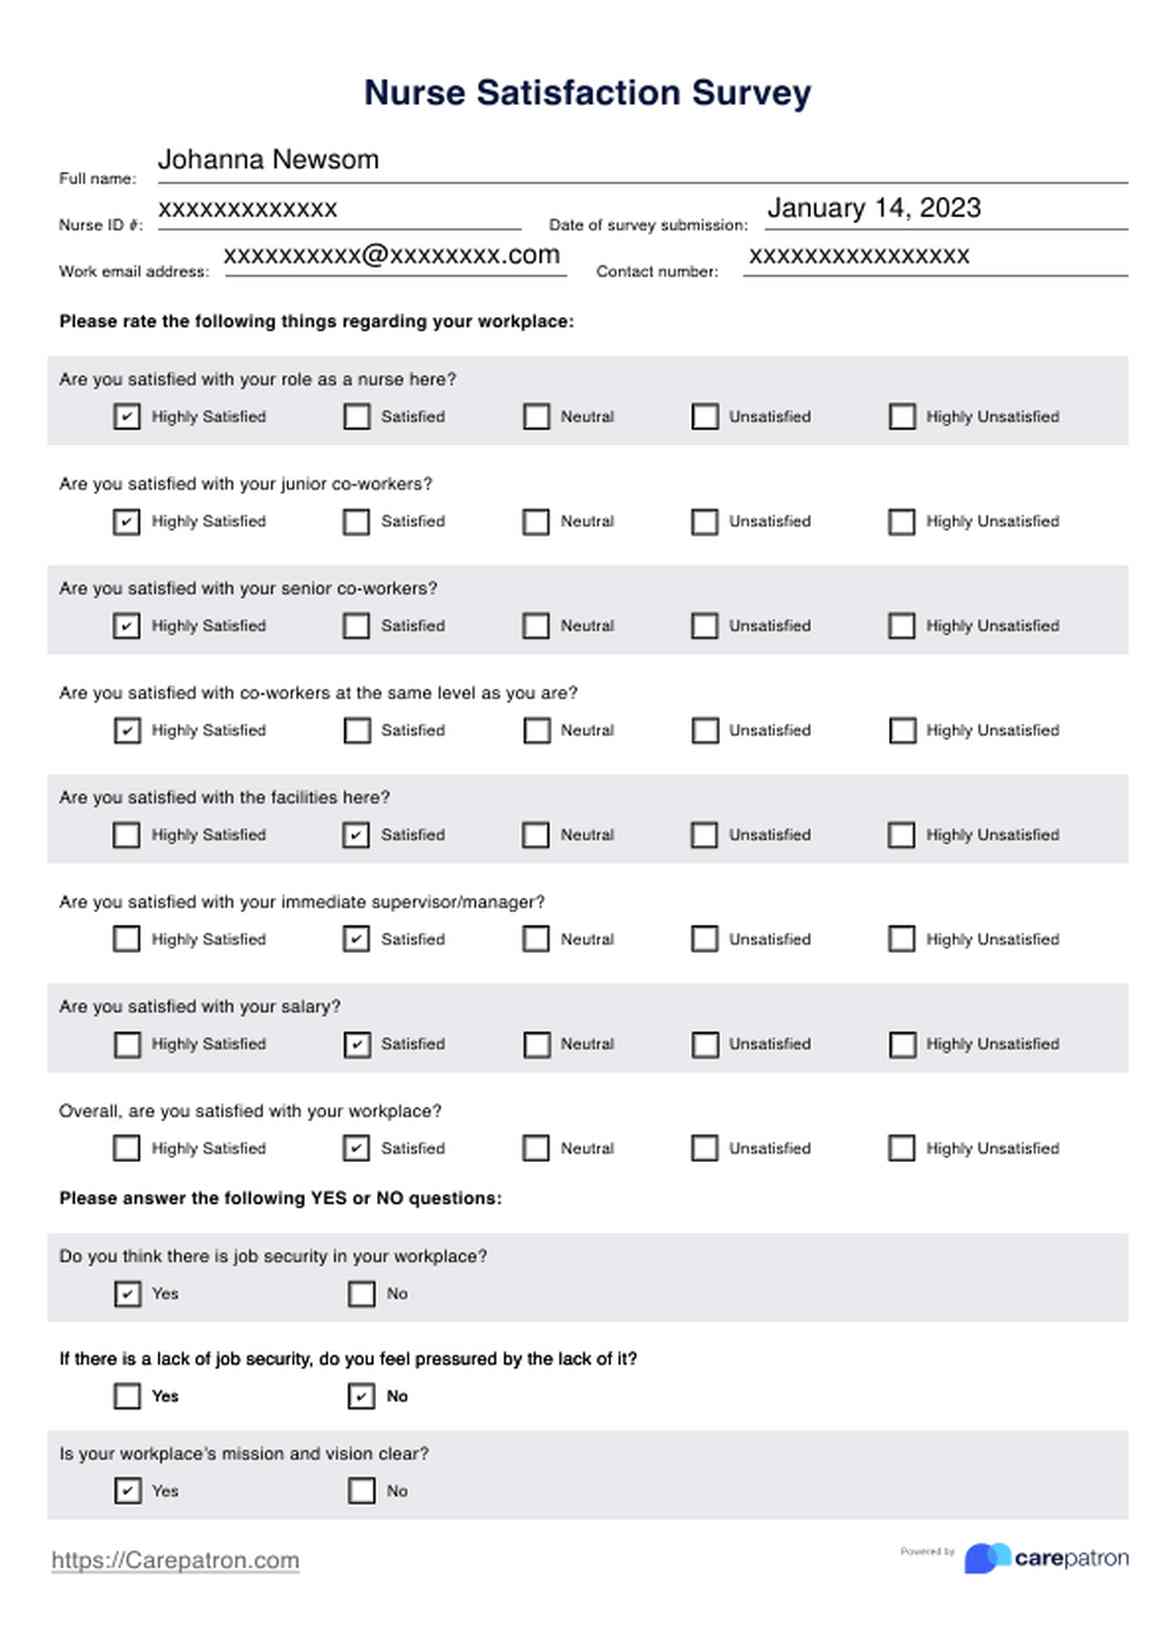 Nurse Satisfaction Survey PDF Example